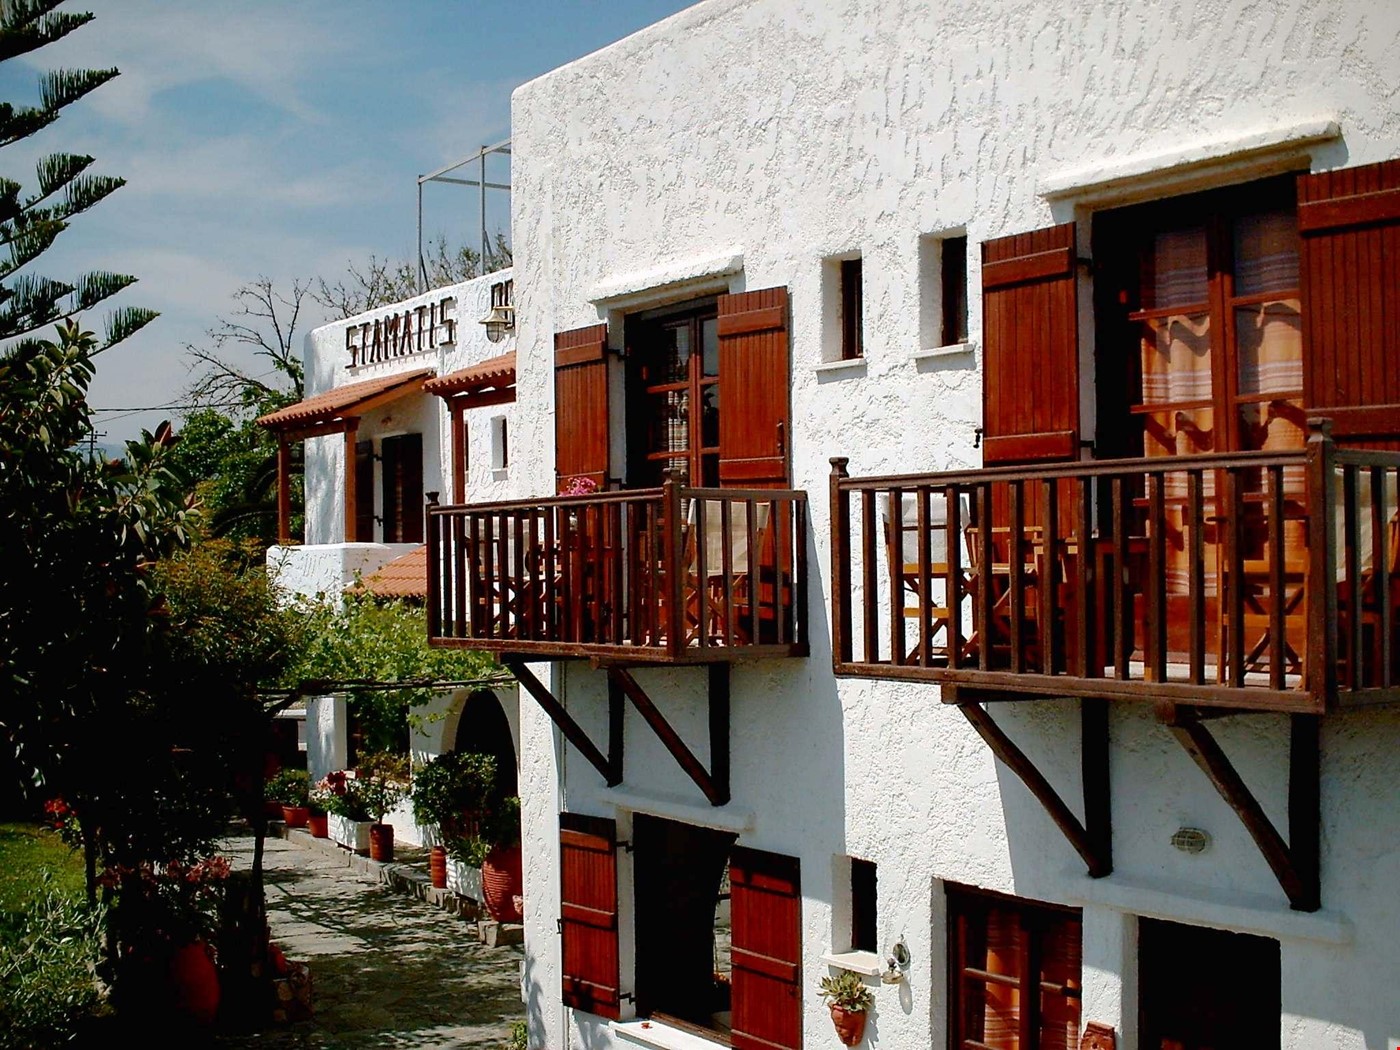 Hotel Pirgos Psilonerou, Platanias, Crete, Chania, Greece nomad remote c023d196-107a-4694-a4c6-91062bcdfd21_Side View 1.JPG